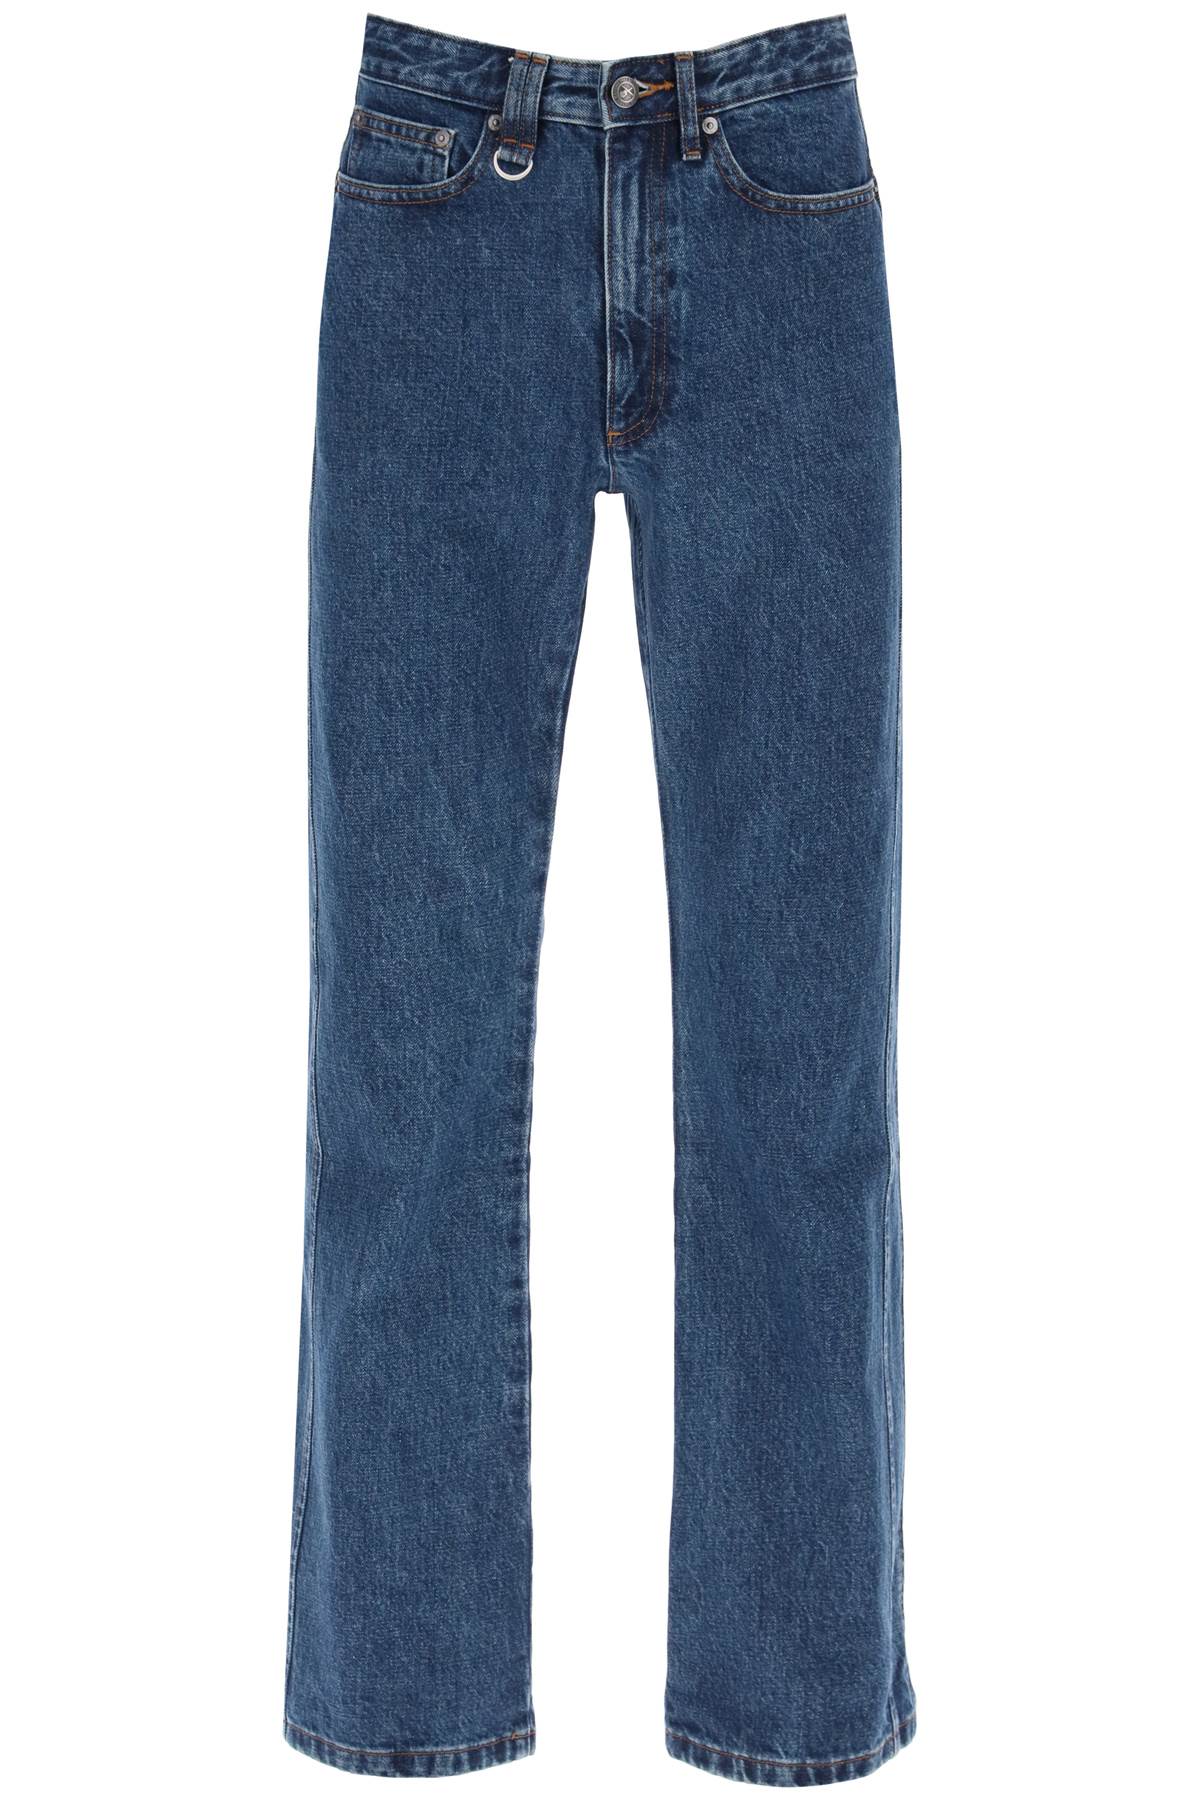 Shop Apc Ayrton Regular Fit Jeans Jeans In Washed Indigo